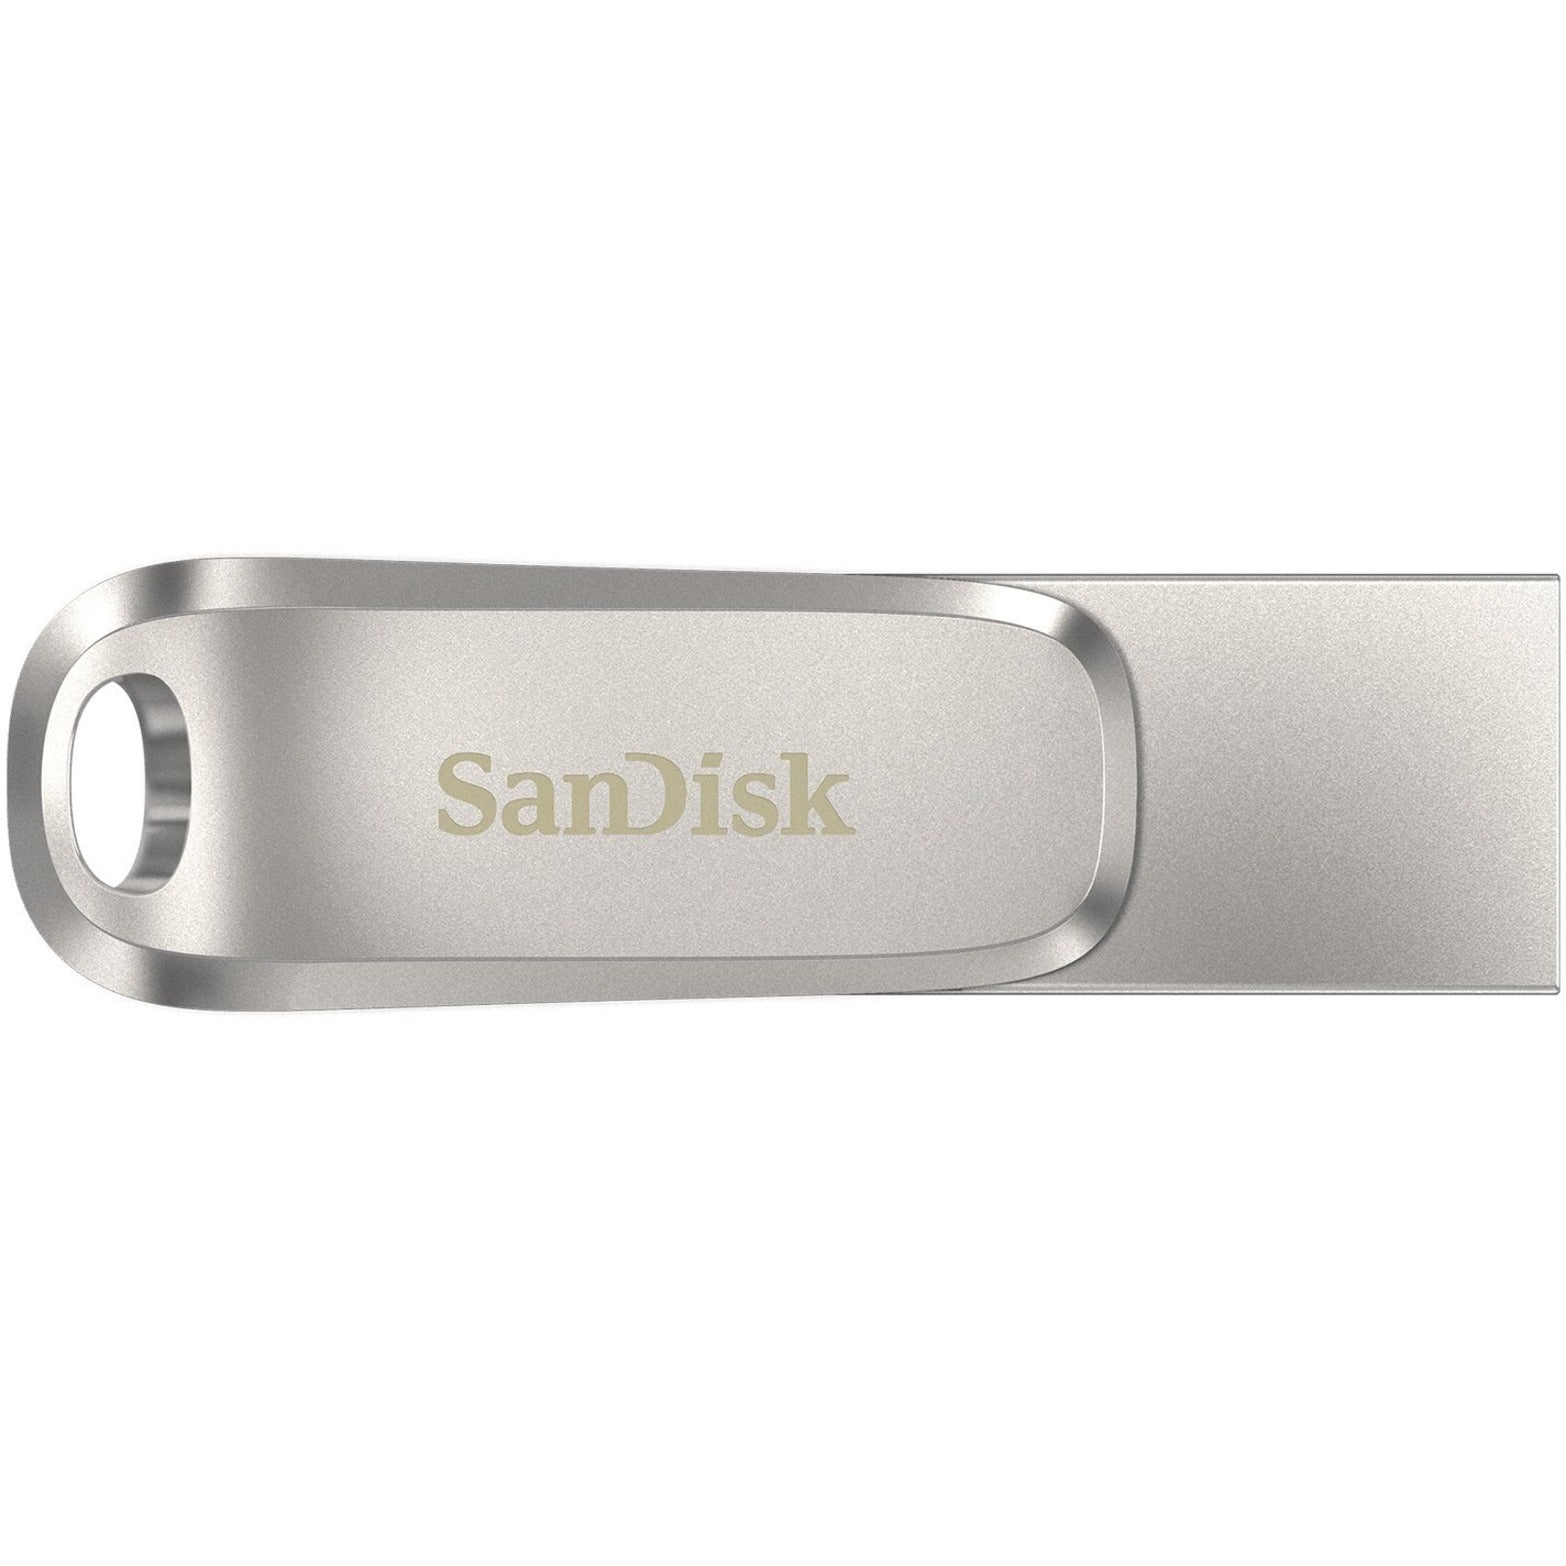 SanDisk SDDDC4-256G-A46 Ultra Dual Drive Luxe USB Type-C Flash Drive, 256GB Storage, 150 MB/s Read Speed